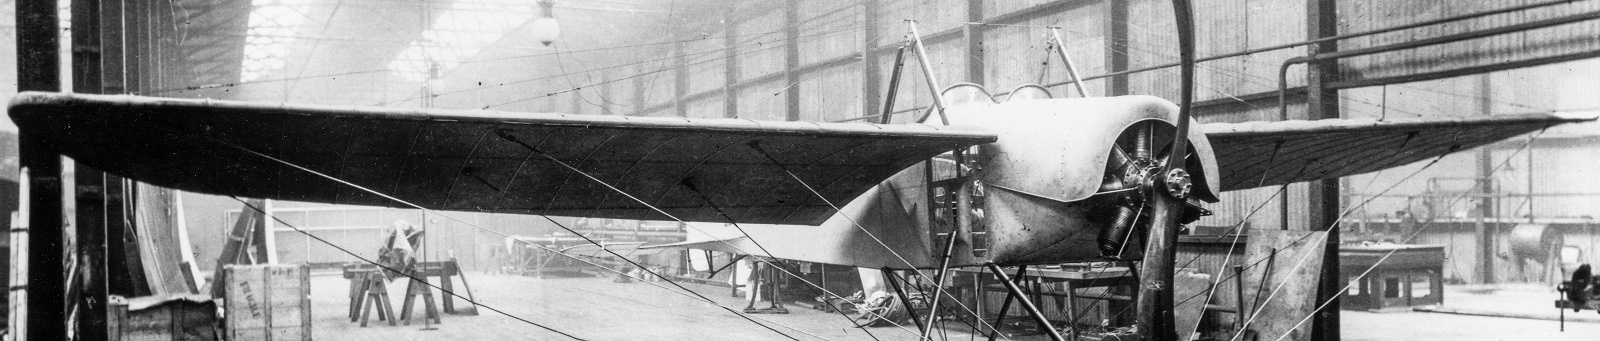 Vickers No 8 Monoplane